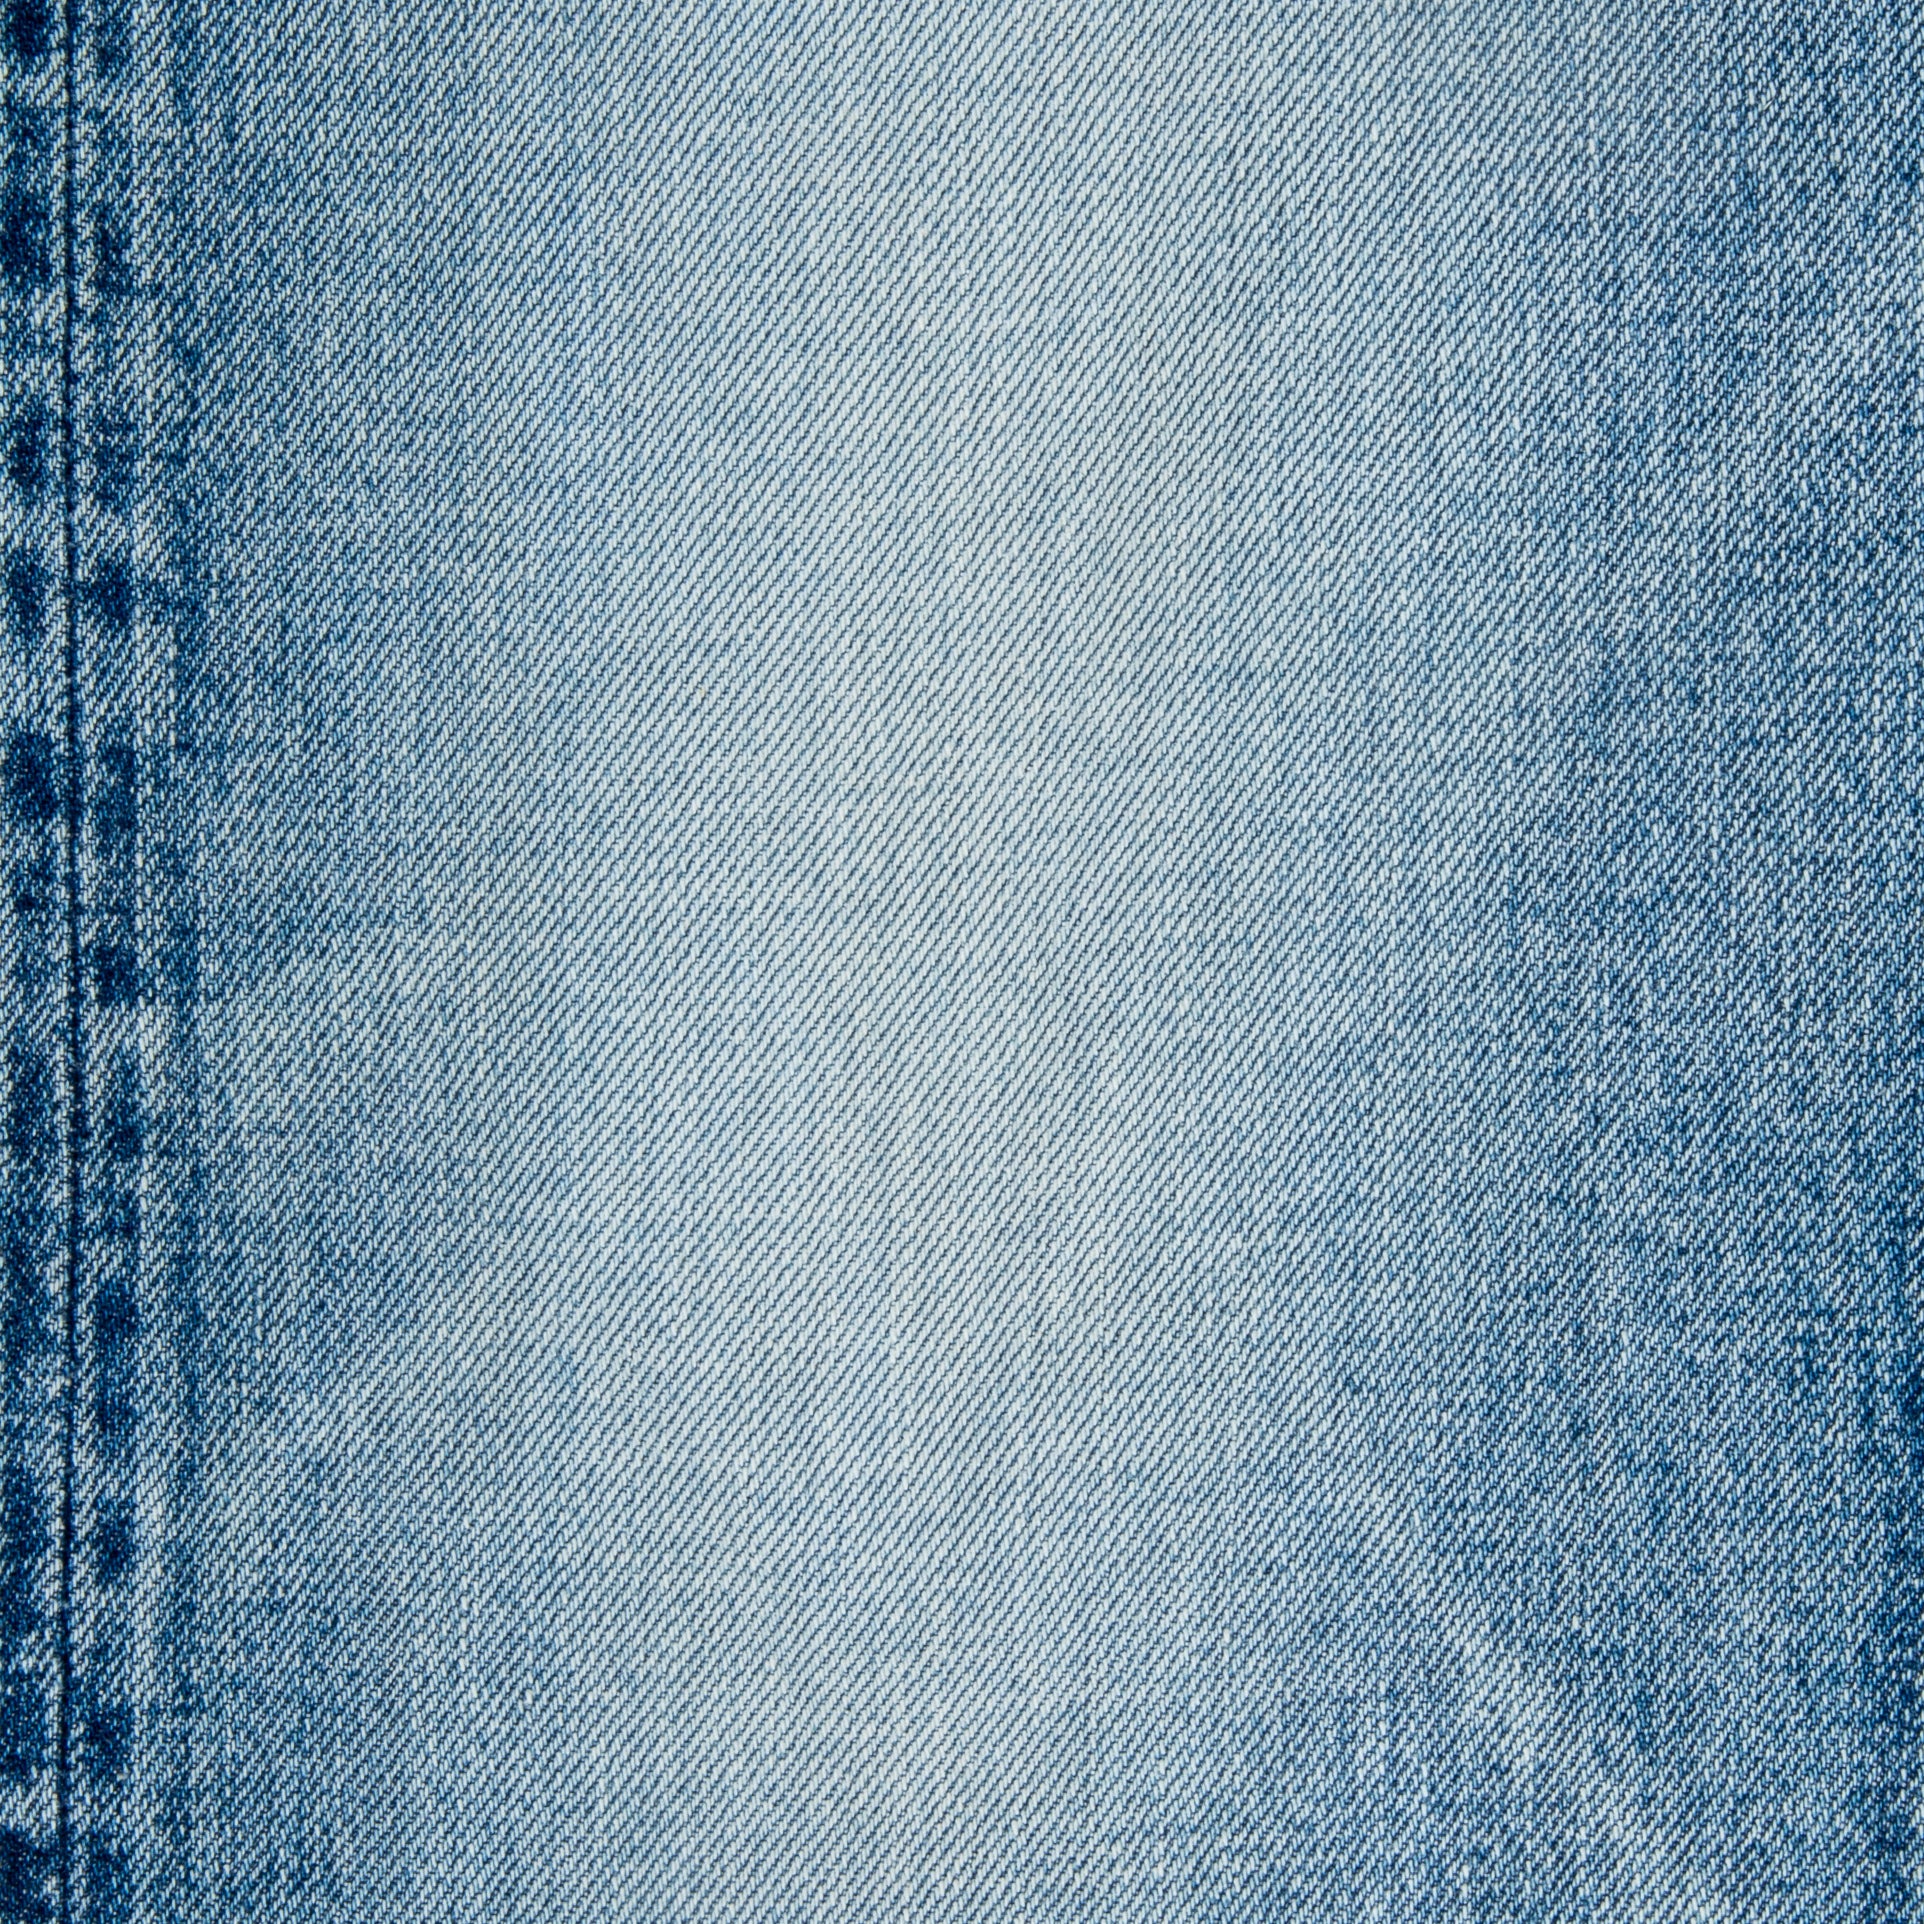 Studio D´artisan 1826U Ivy Fit Used Blue Wash